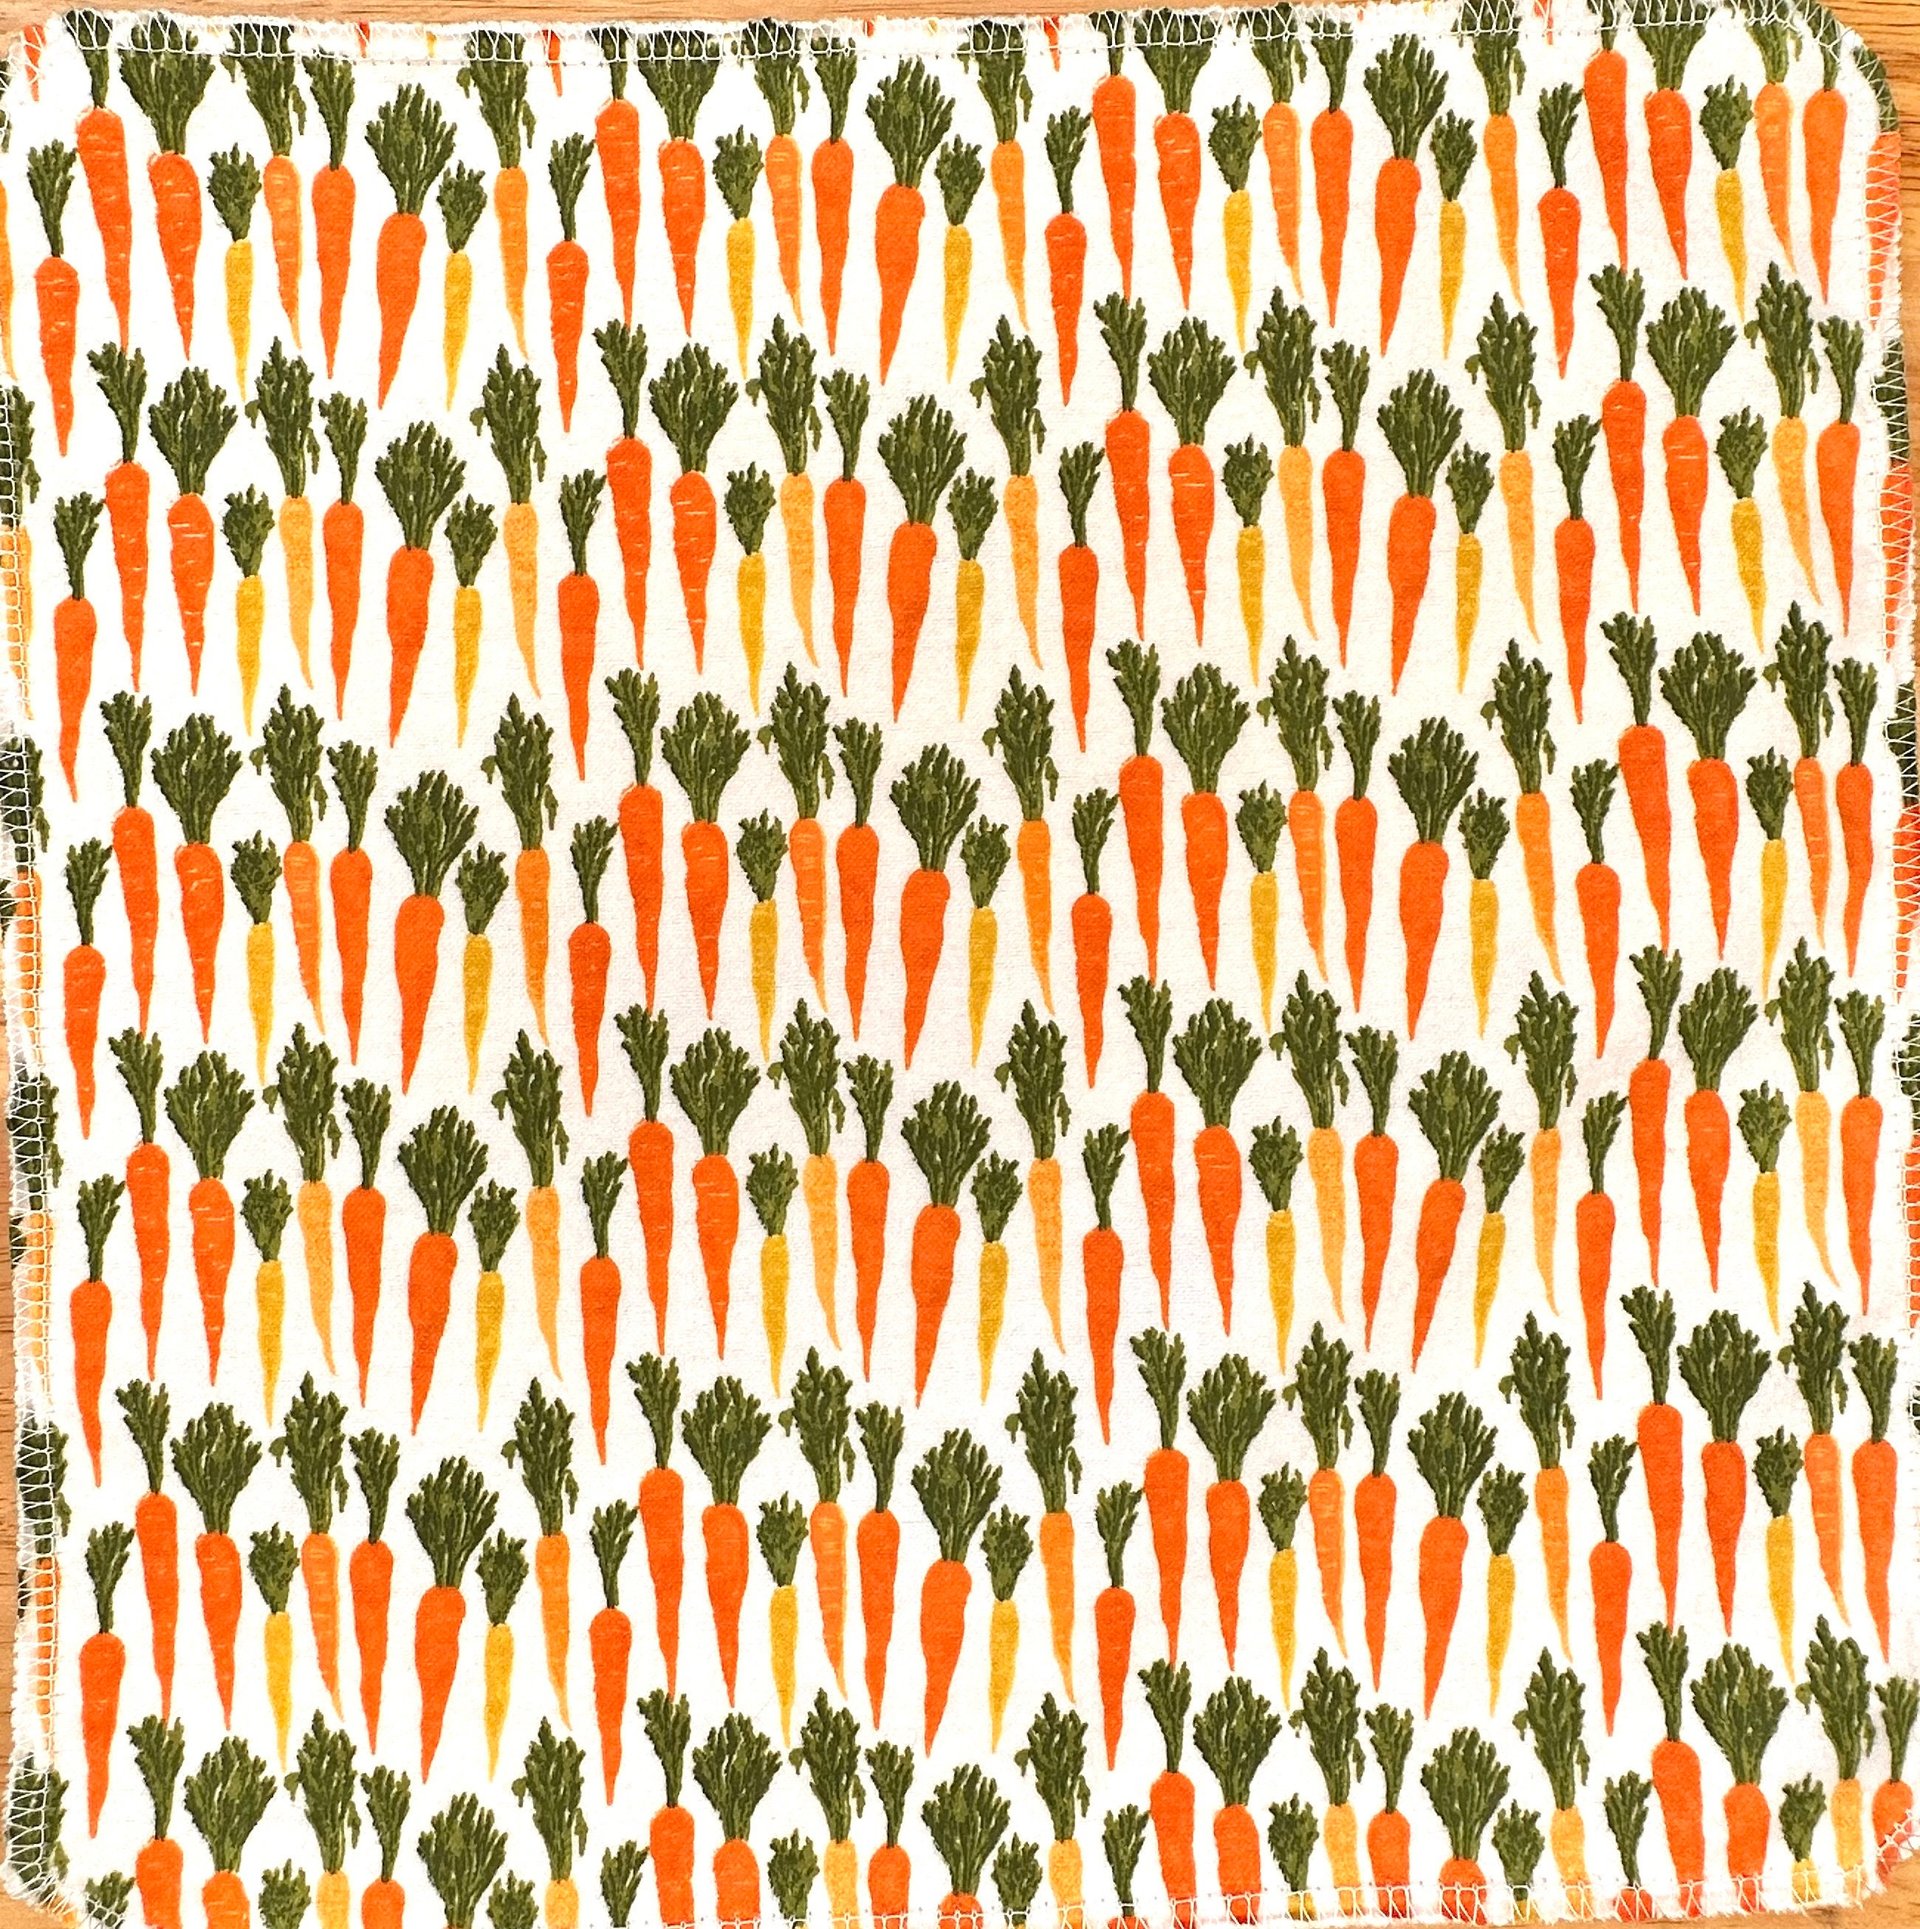 Carrots Paperless Towels || Unpaper Towels || Zero Waste Alternative || Cloth Napkins